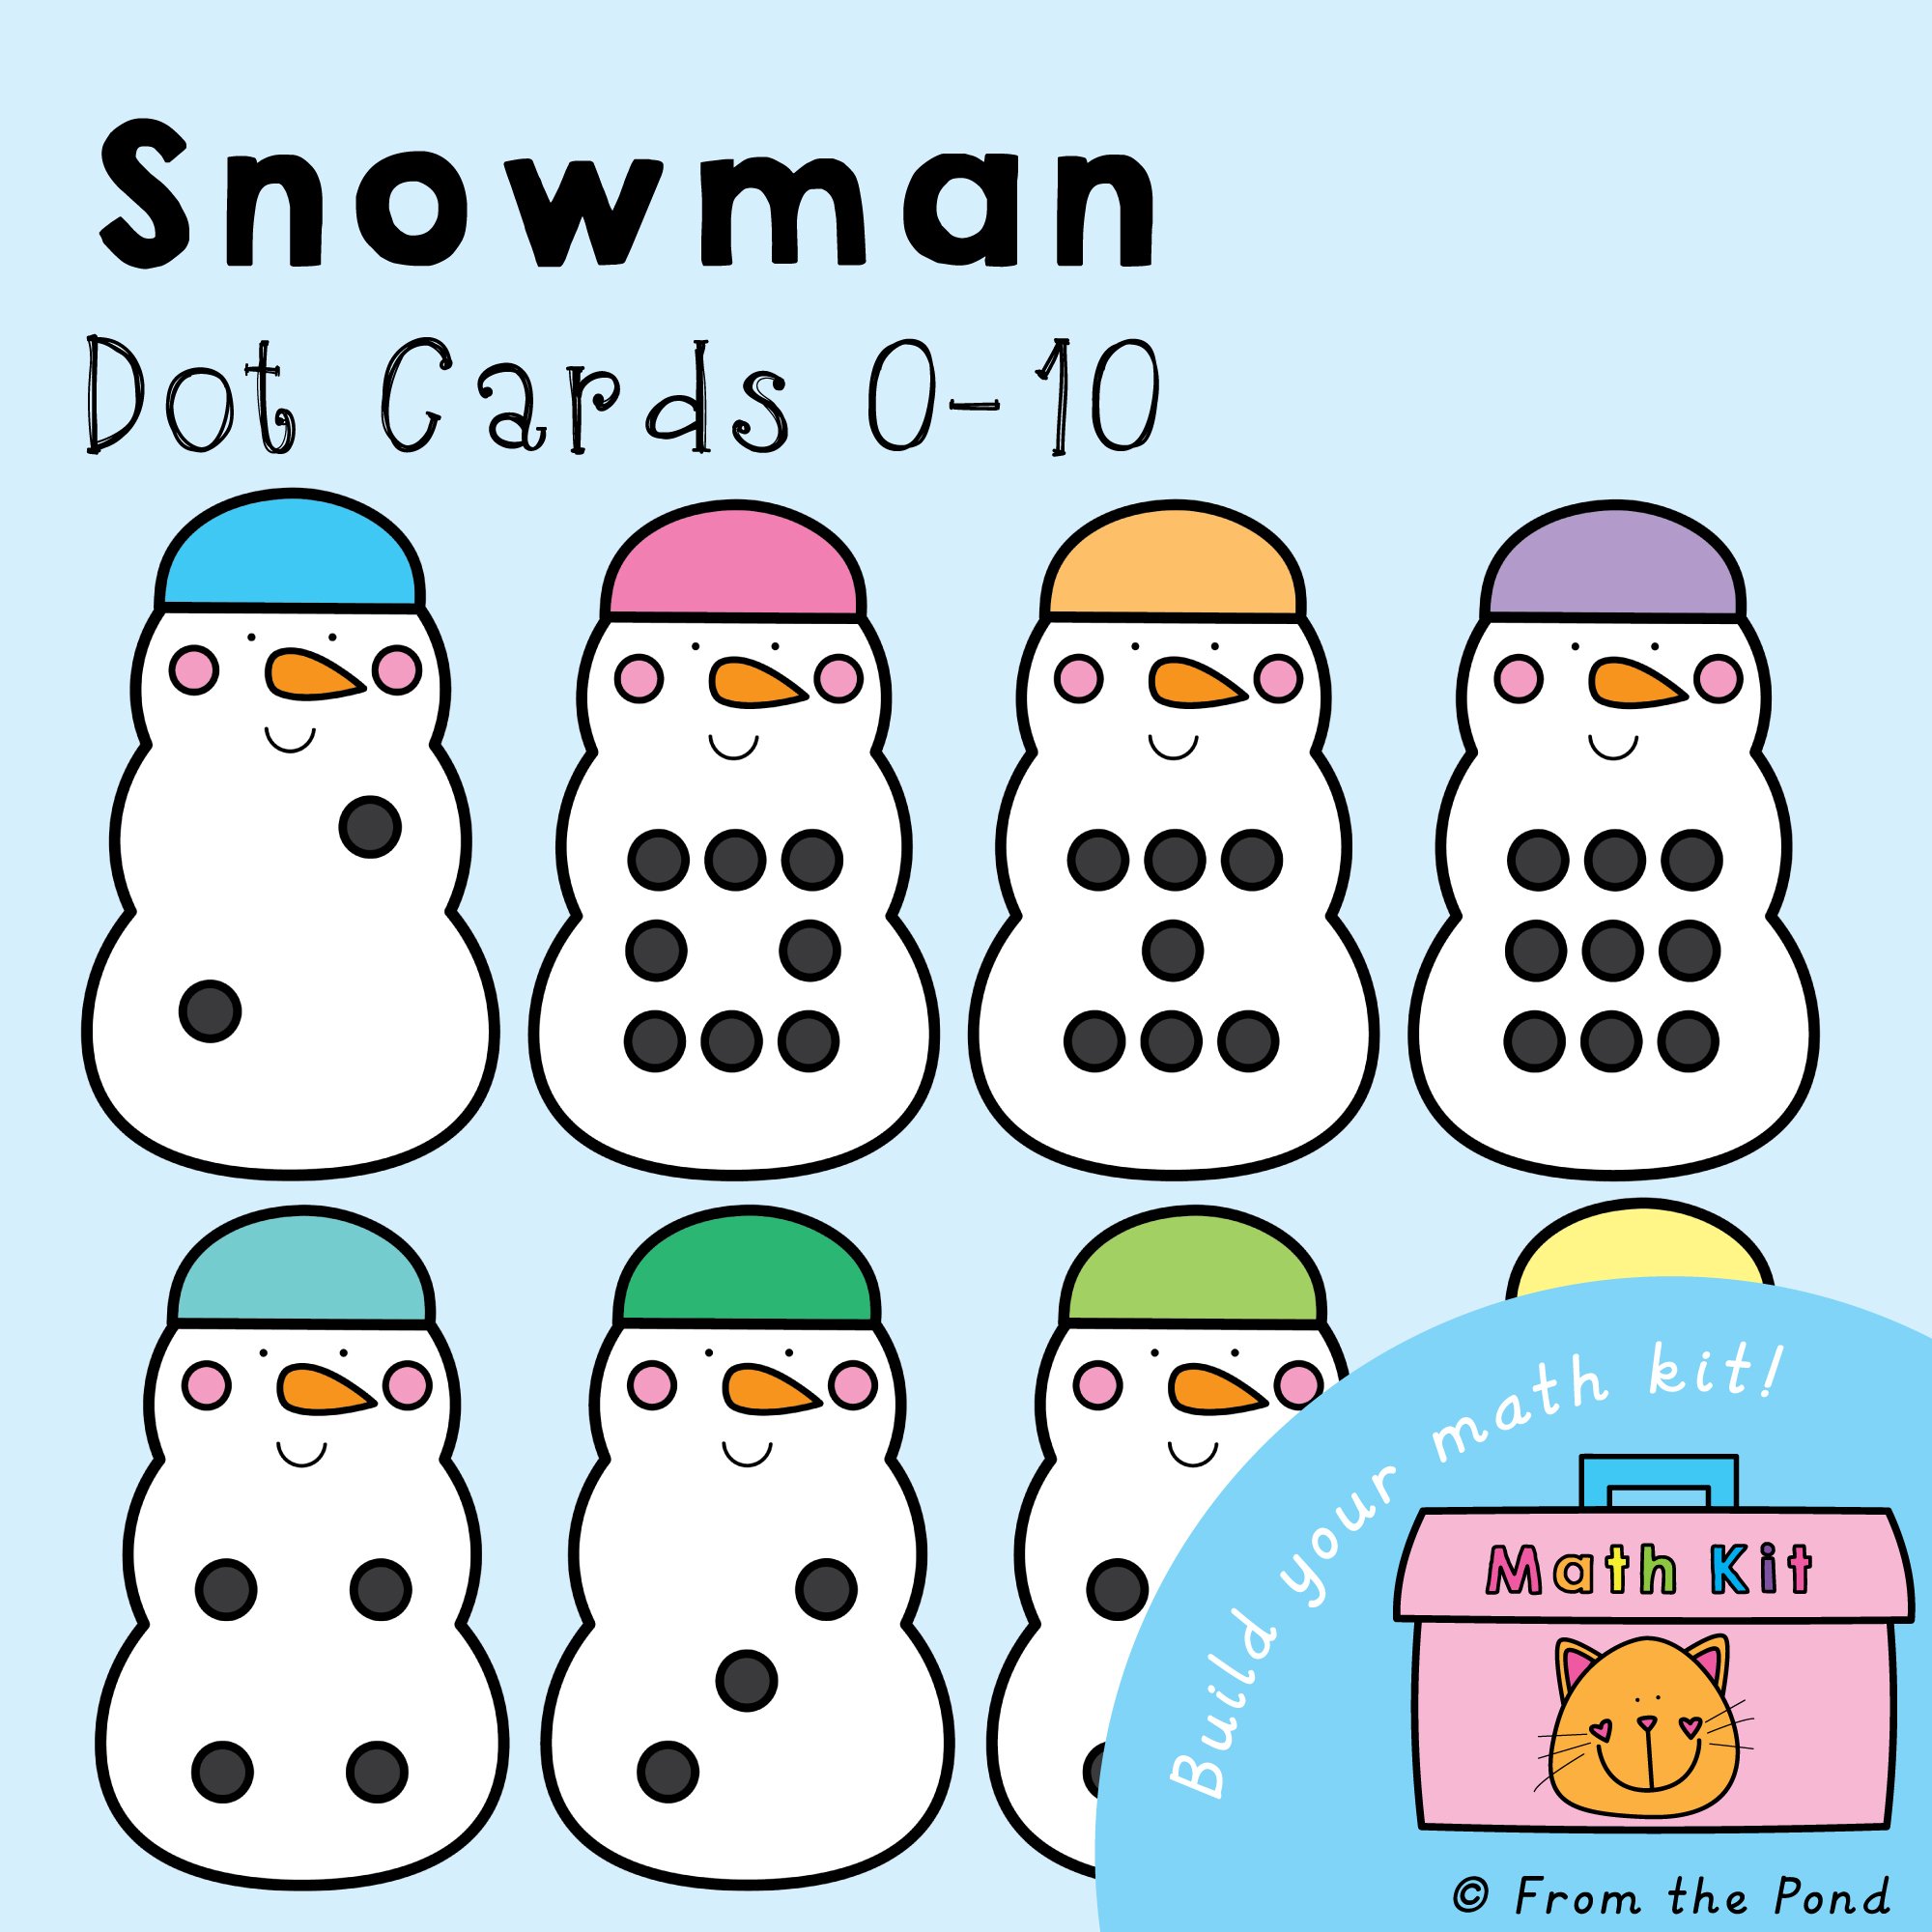 snowman-dot-cards-pic-01.jpg